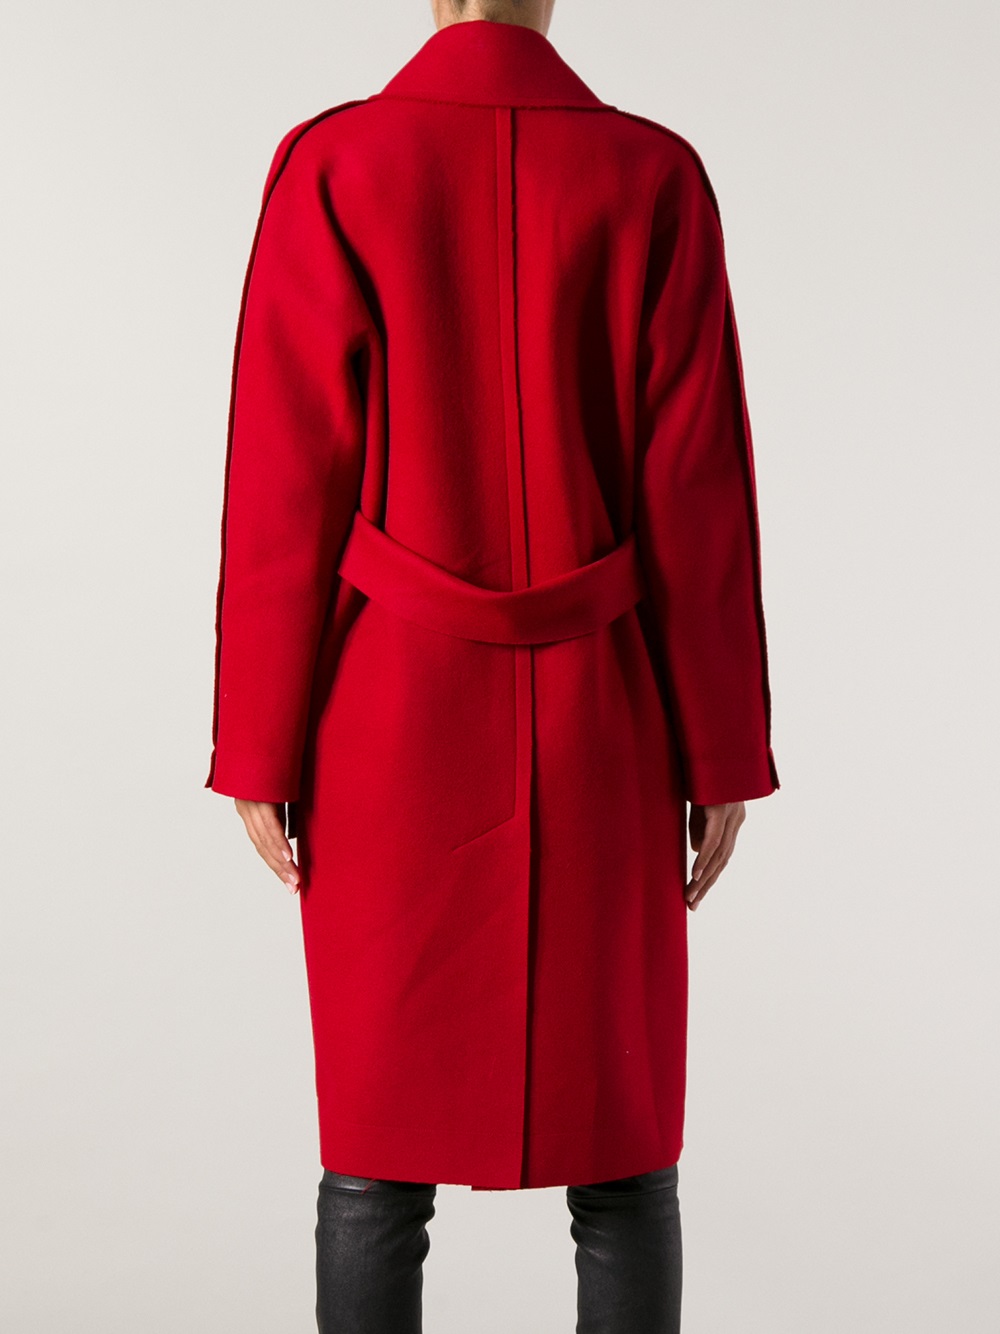 Lyst - Lanvin Lanvin Pocket Coat in Red